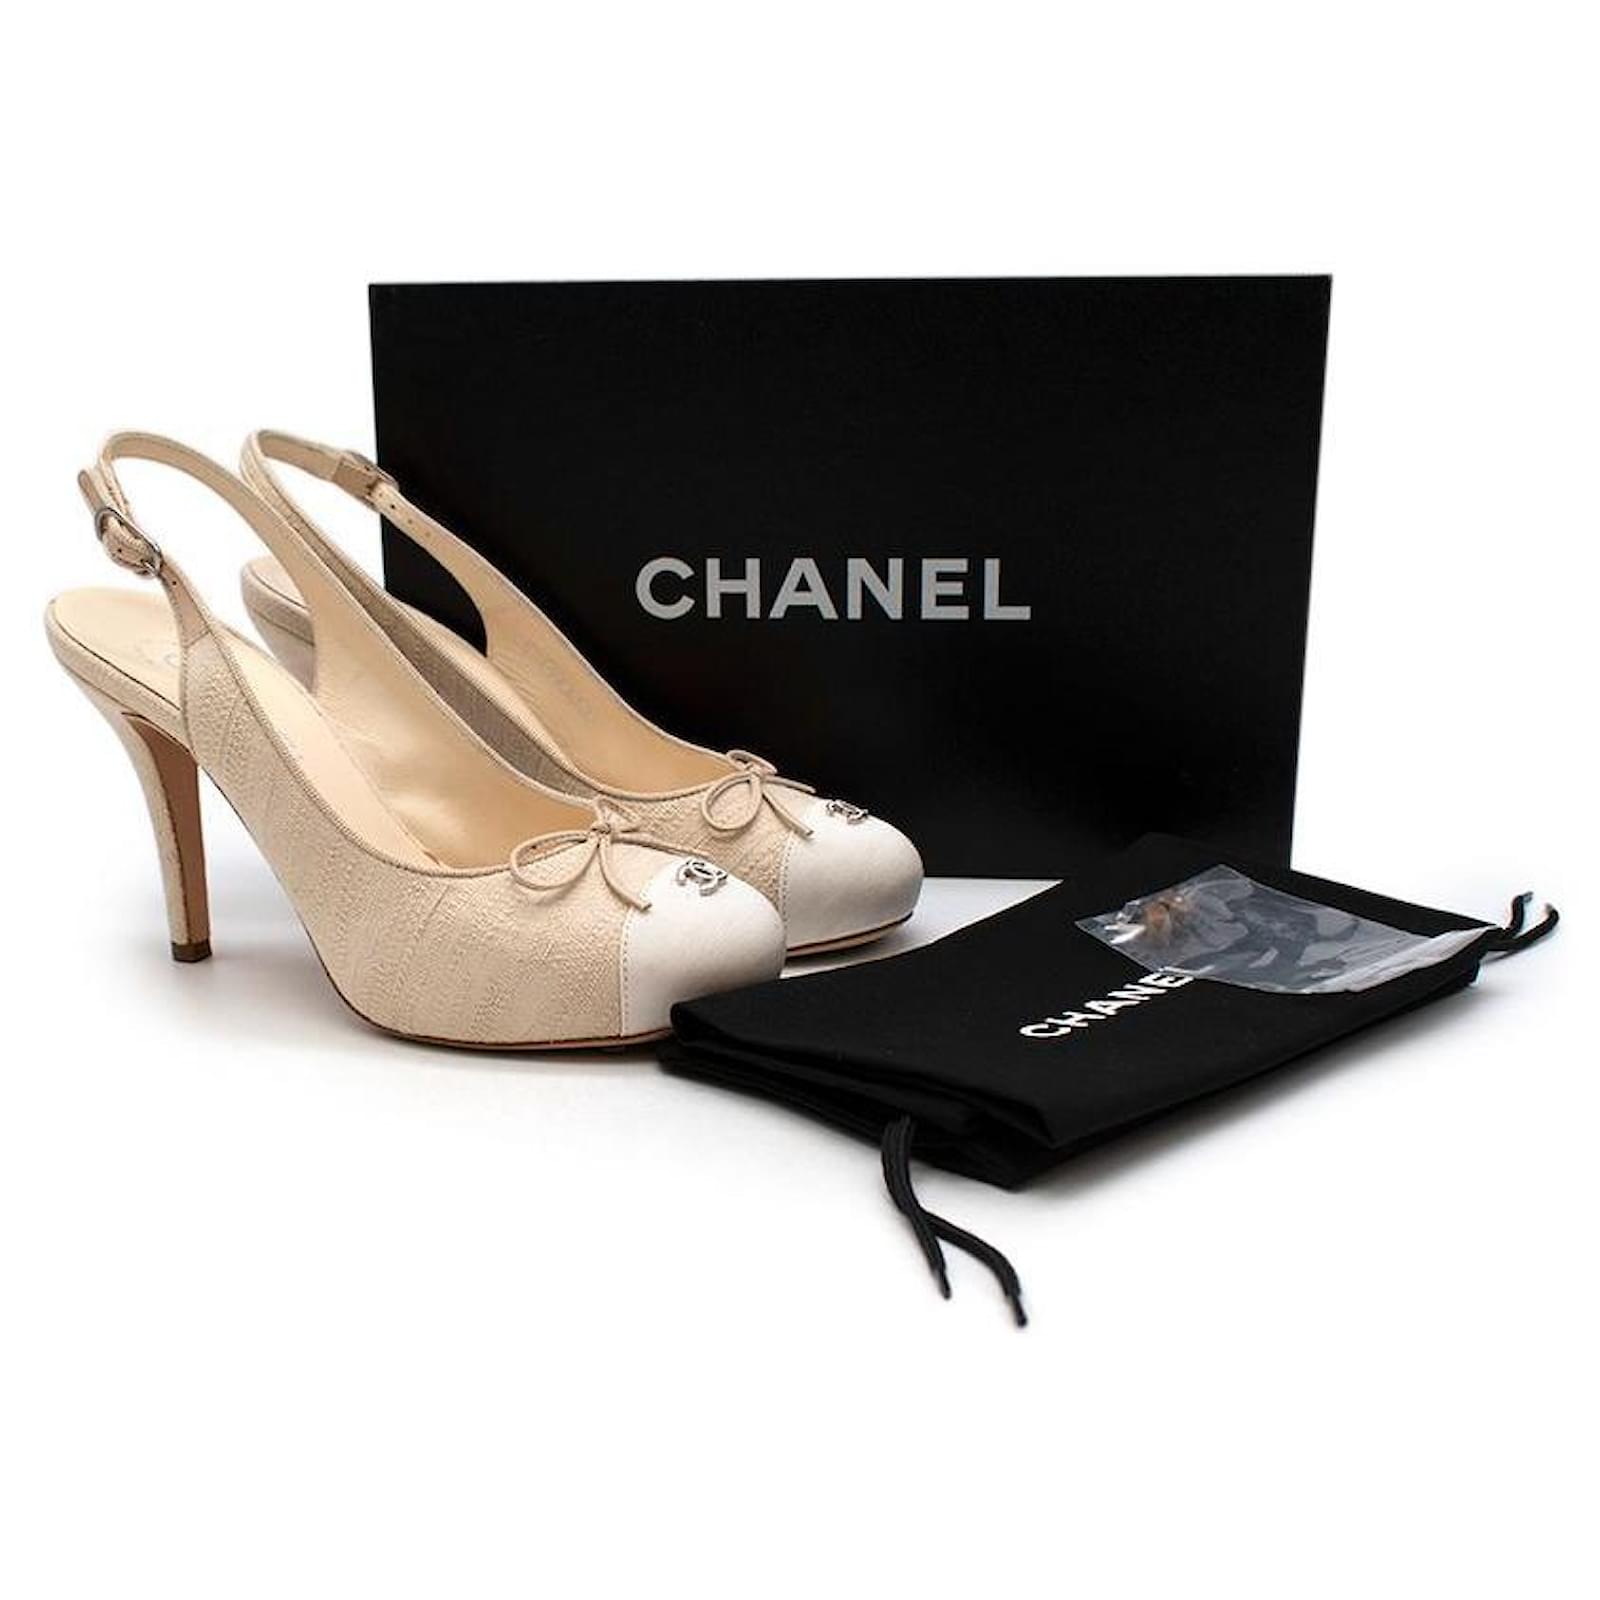 Heels Chanel New Chanel Shoes Pumps Logo CC G29756 36 Black Leather Pumps Shoes